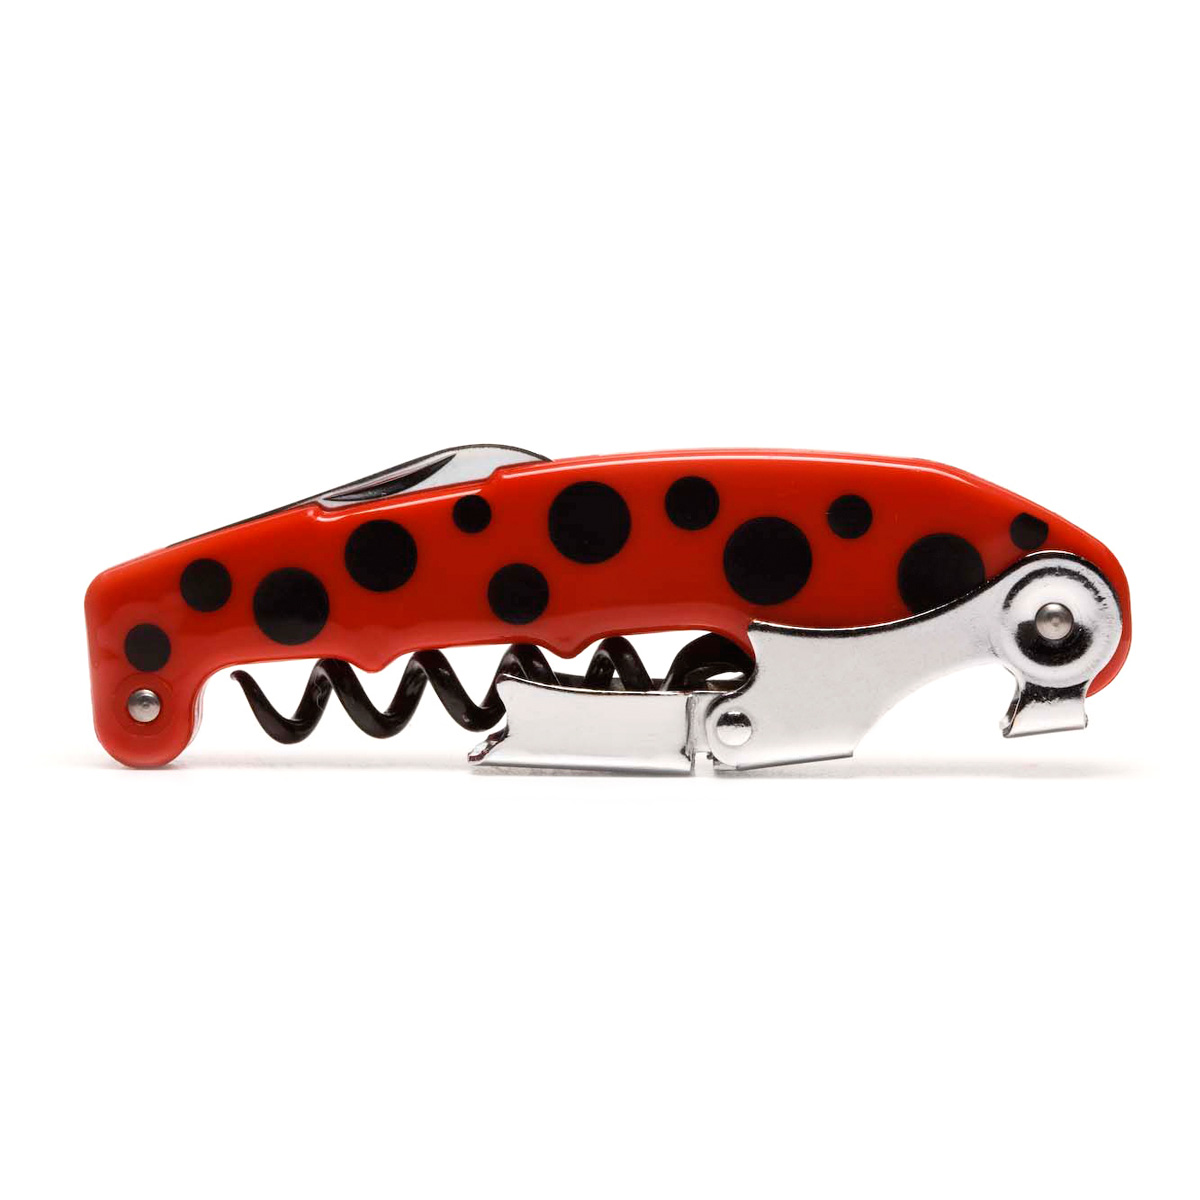 Штопор Retro Ladybug Red, 16 см, Пластик, Металл, Koala, Испания